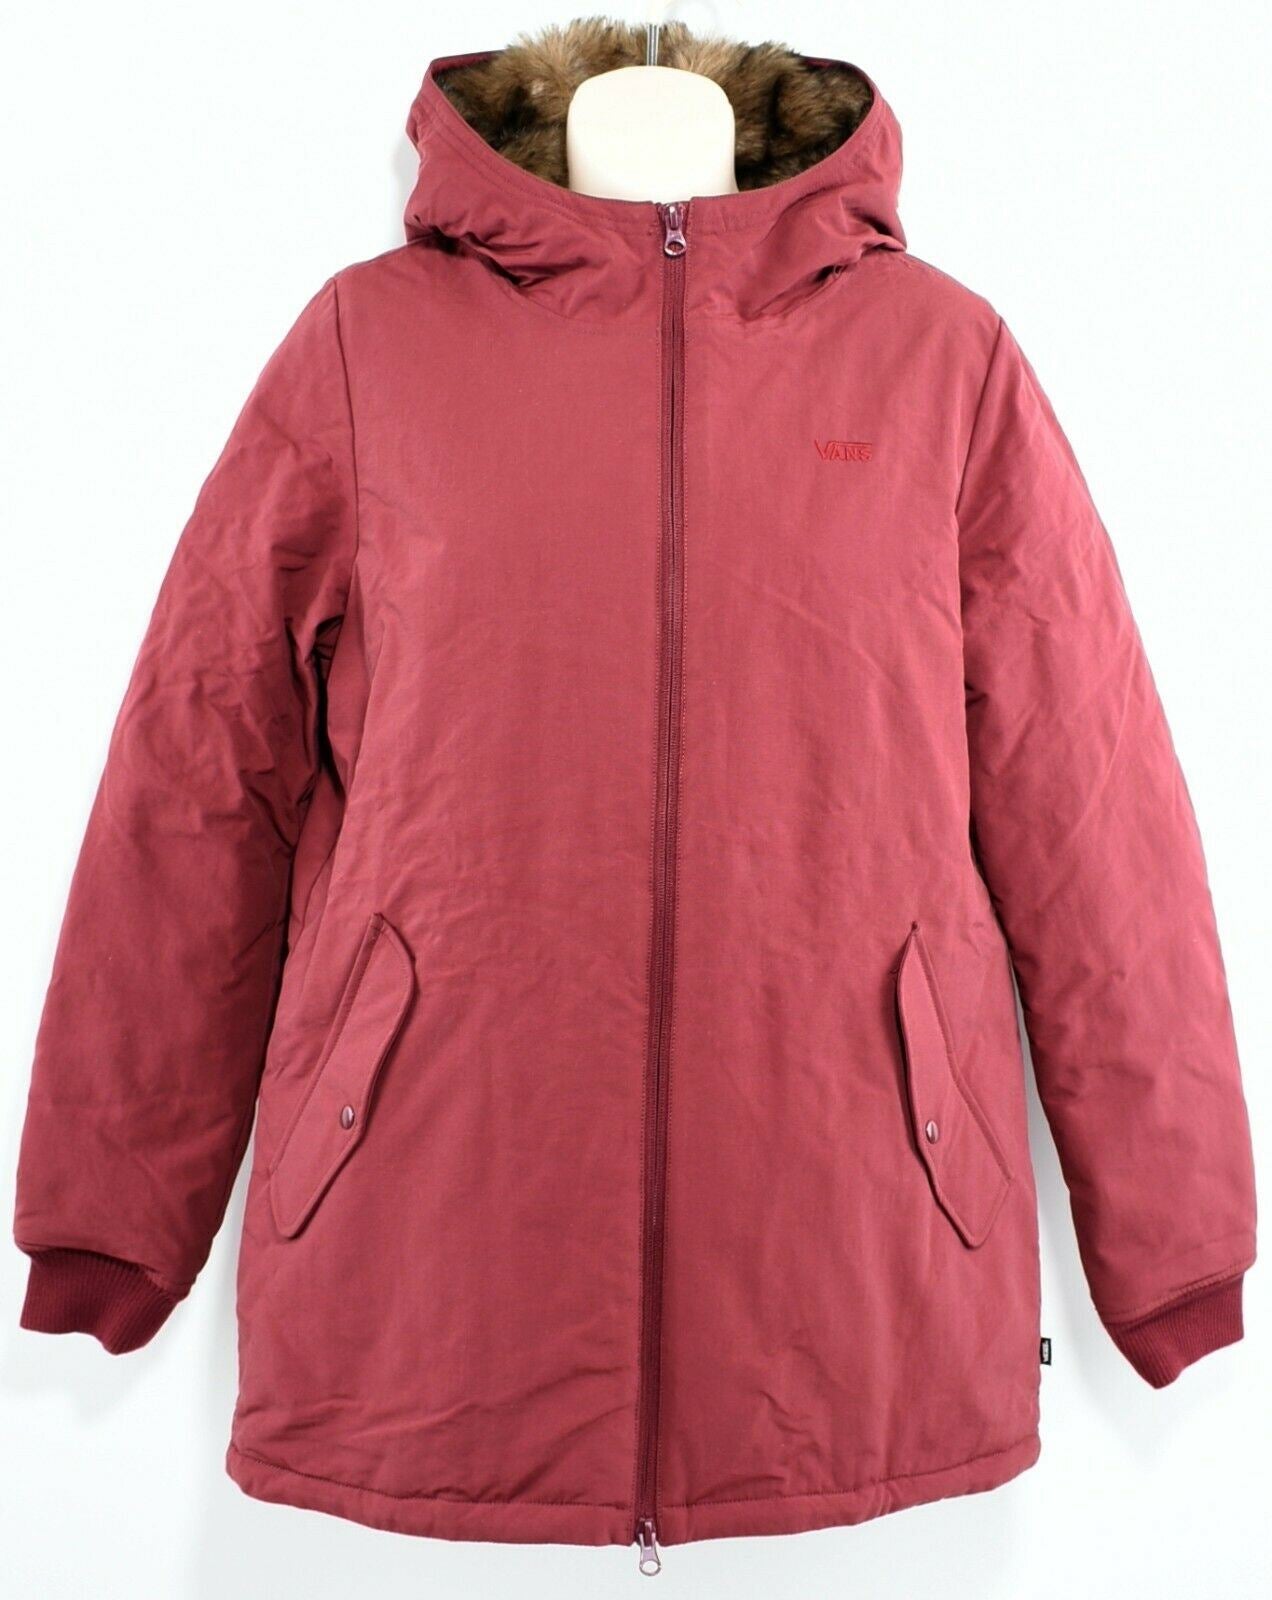 VANS Women's Hooded Warm Padded Parka Jacket Coat, Burgundy Red, size S